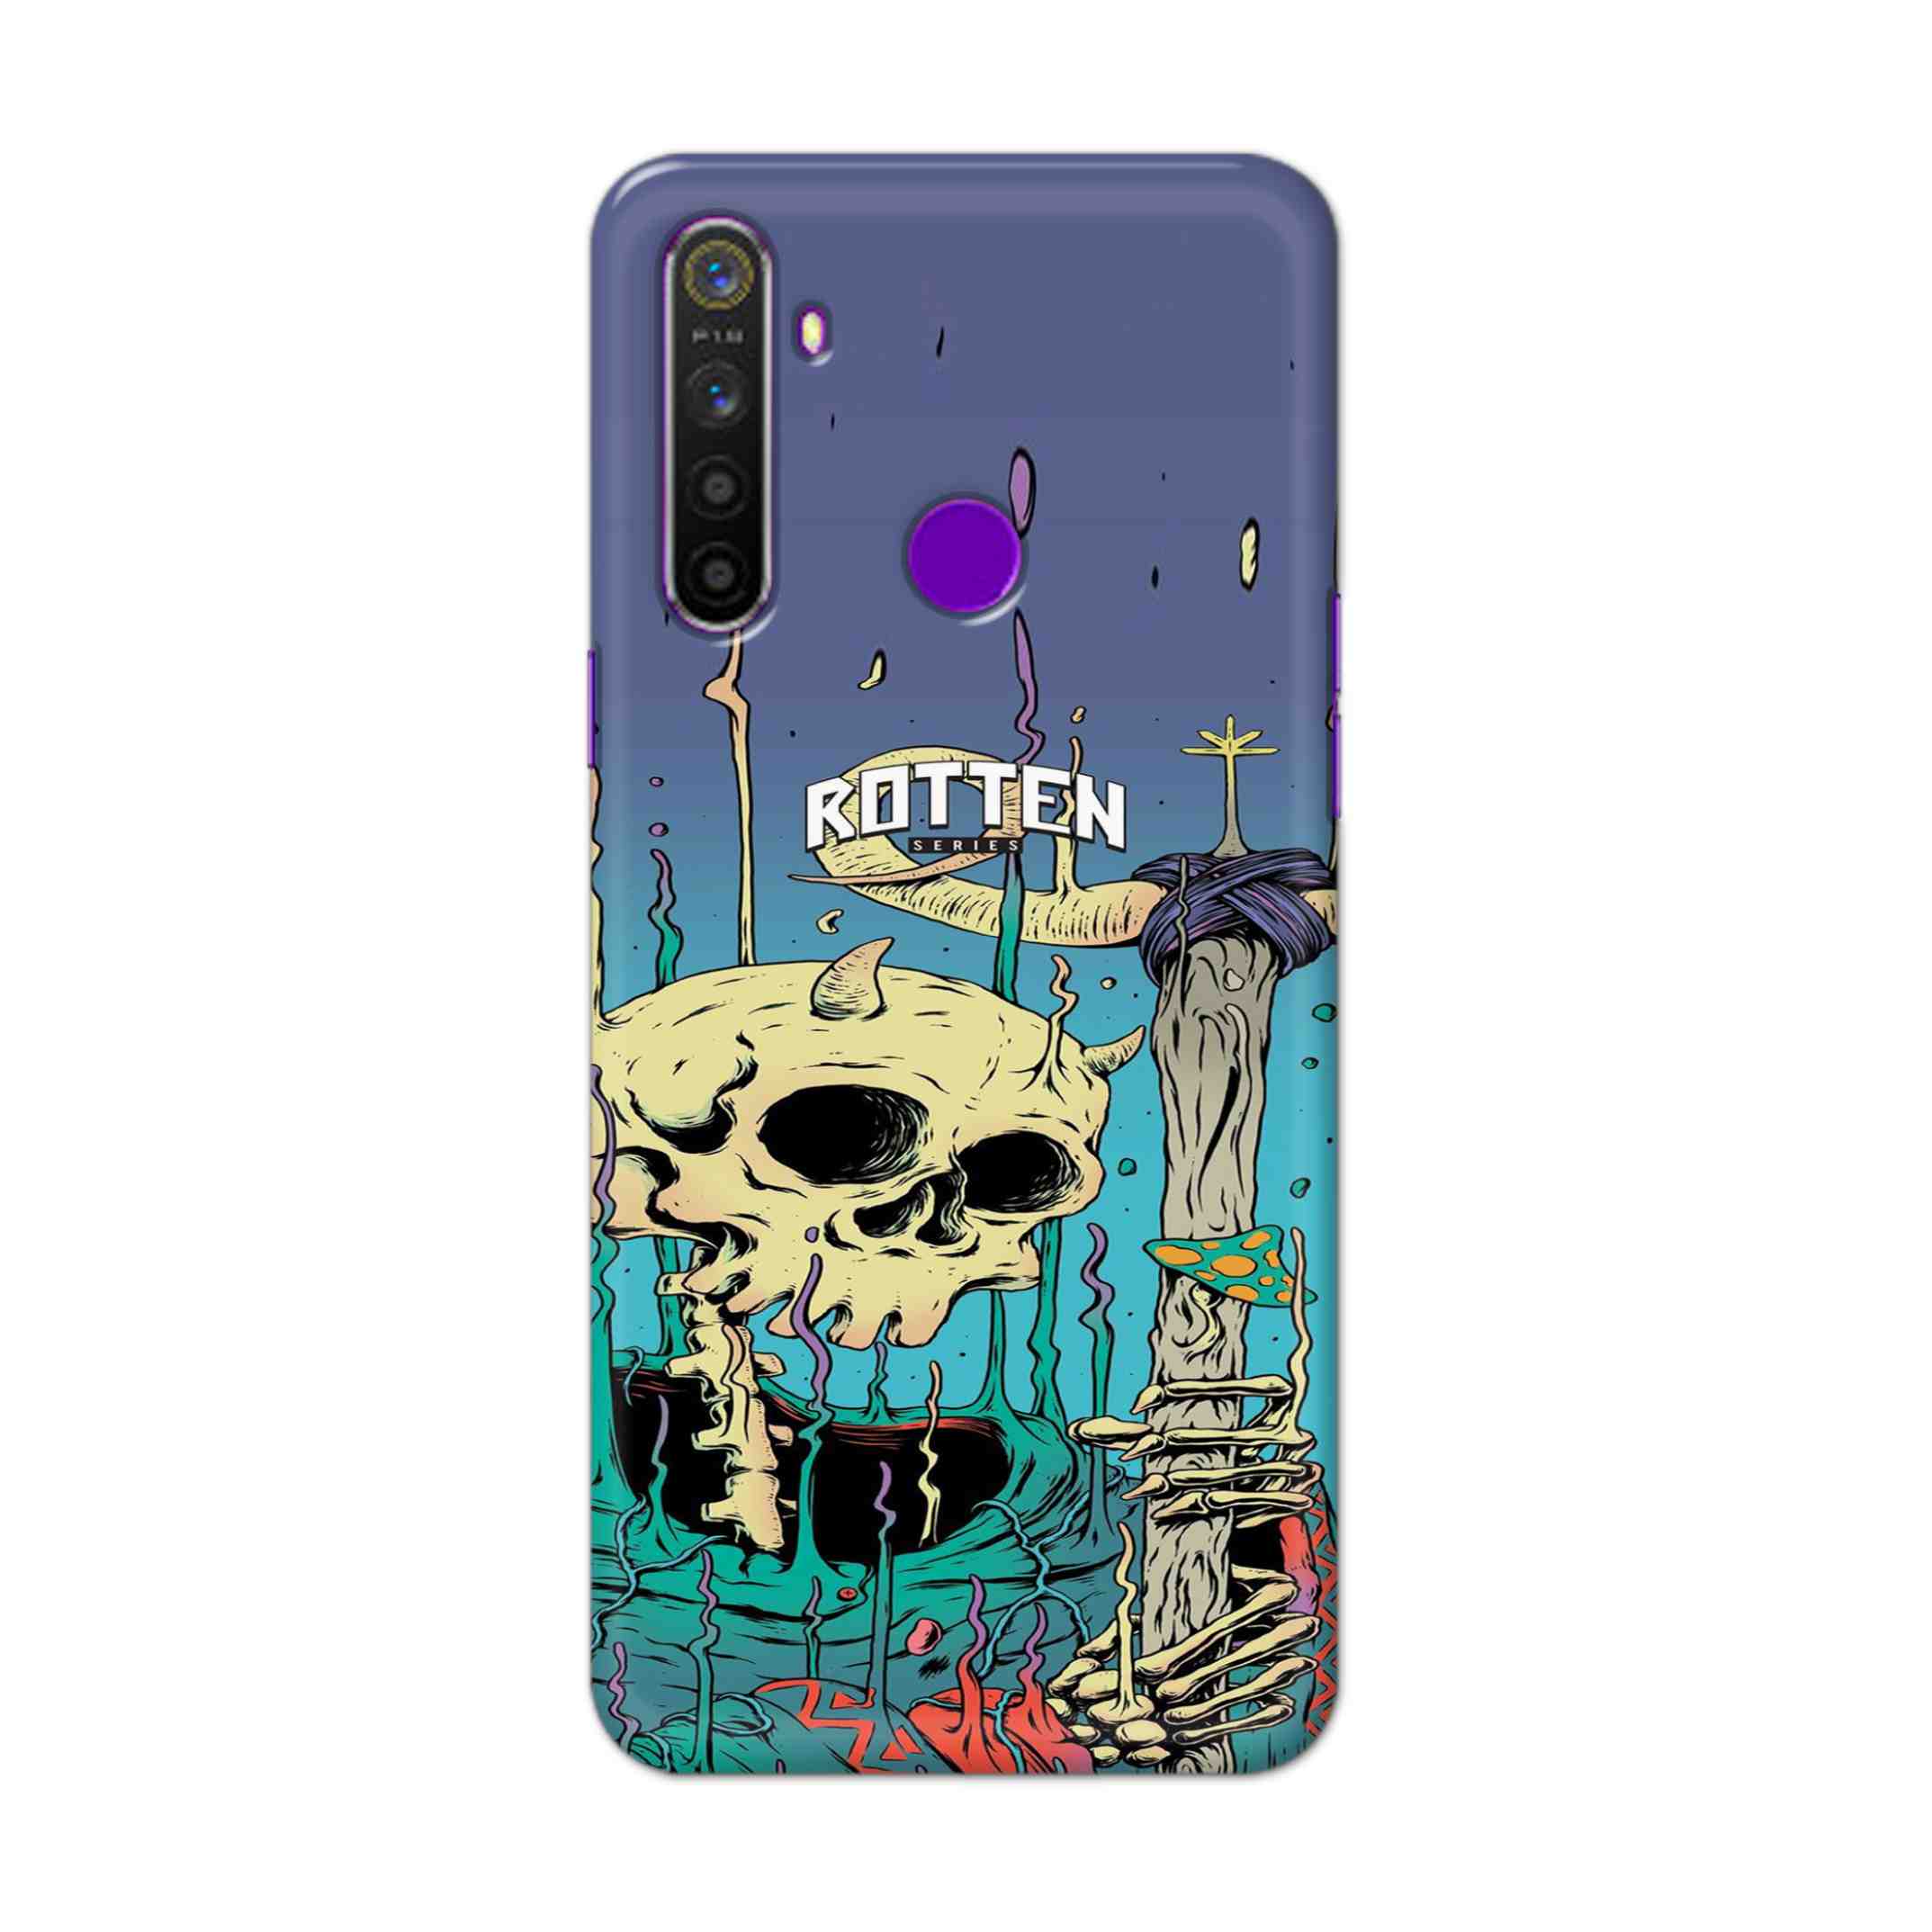 Buy Skull Hard Back Mobile Phone Case Cover For Realme 5 Online